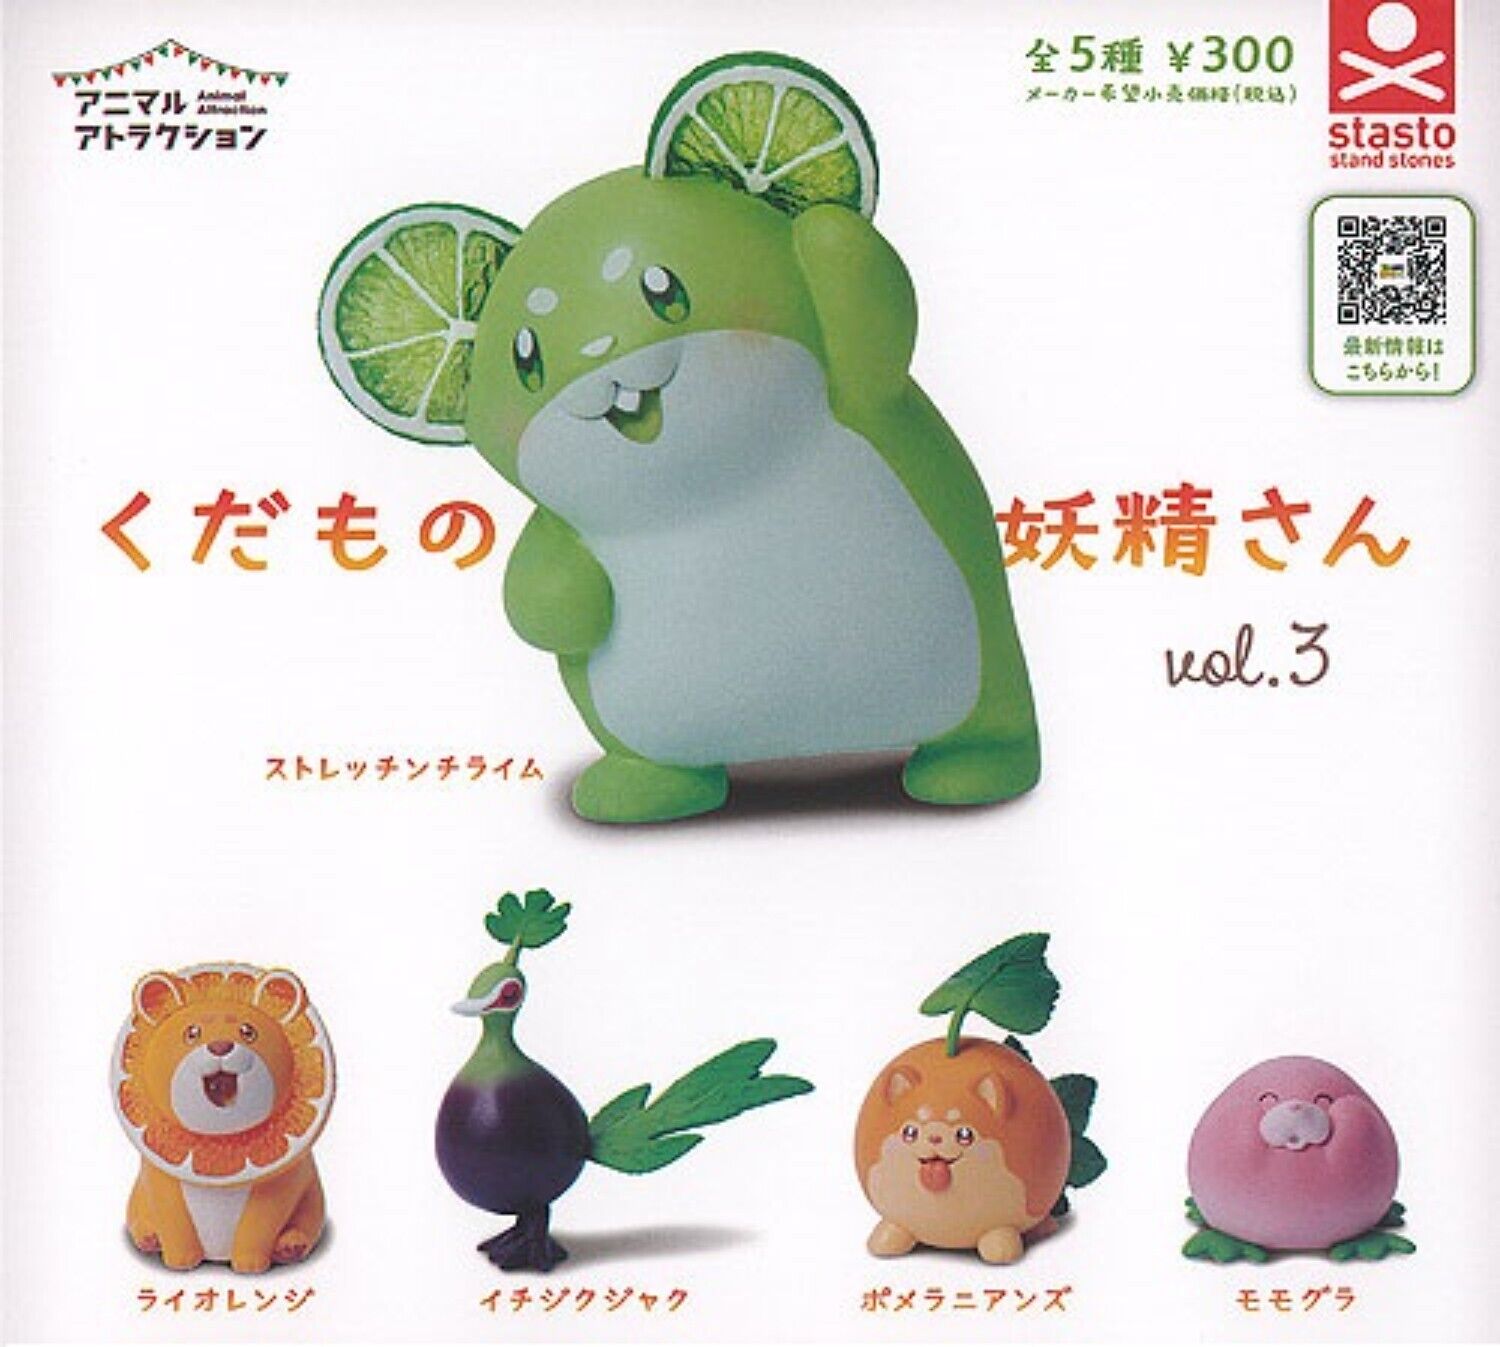 Animal Attraction Fruit Fairy Mascot Capsule Toy 5 Types Full Comp Set Gacha New